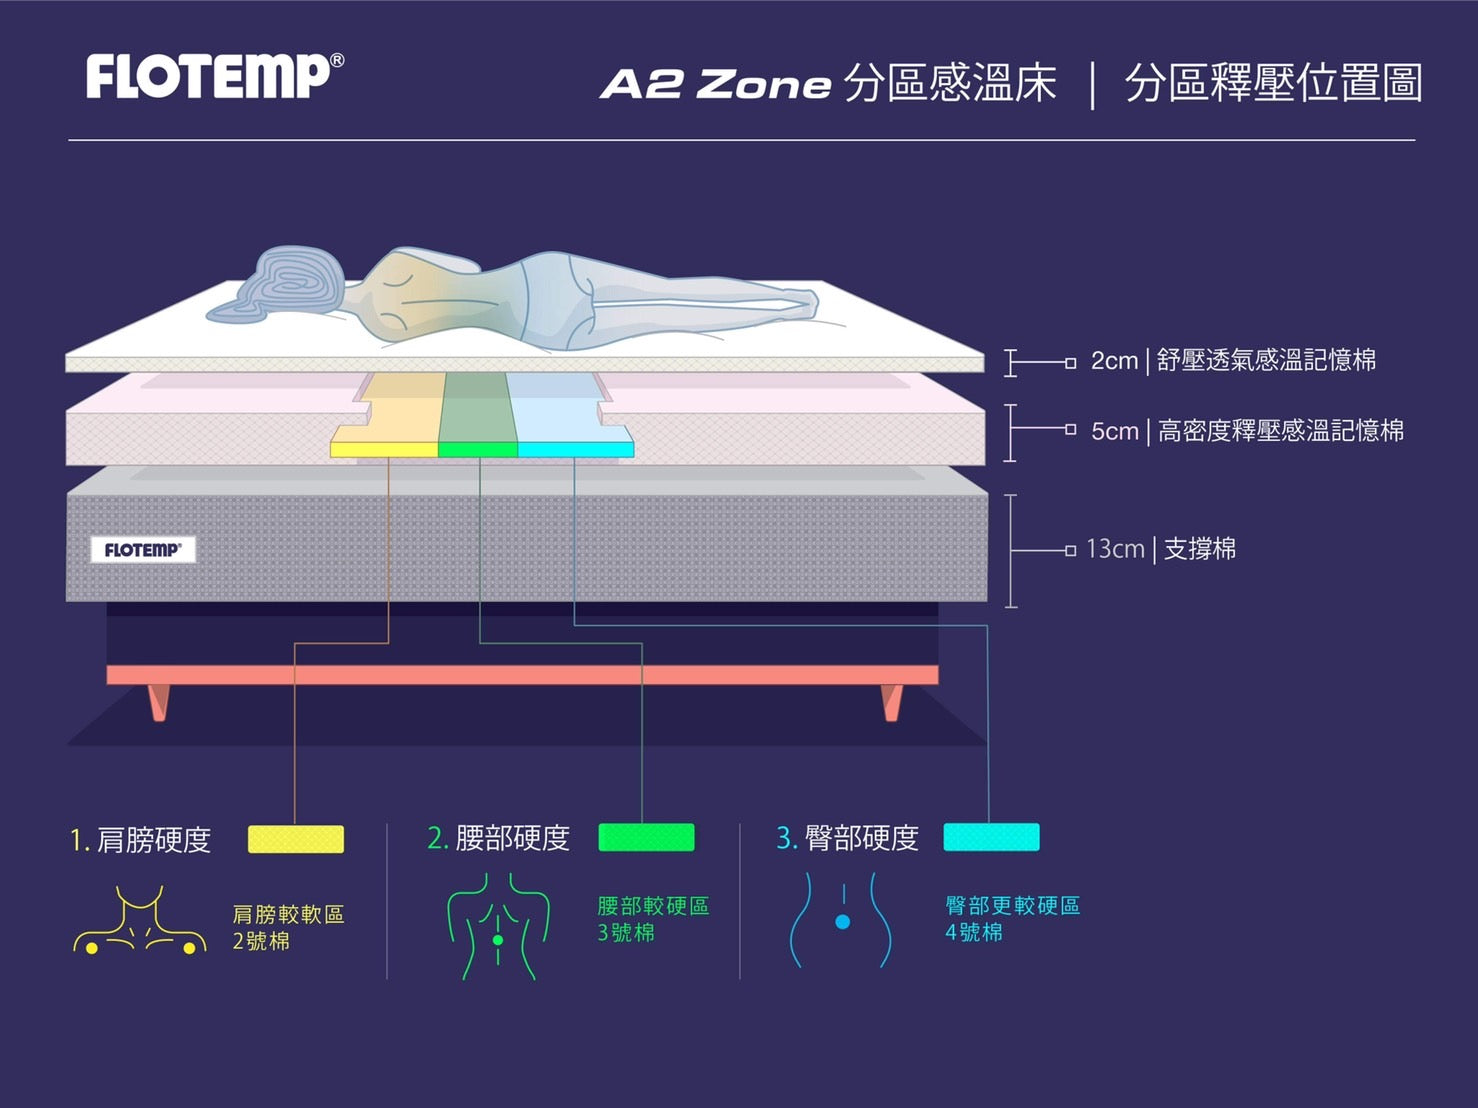 【FLOTEMP福樂添】A2 Zone 20公分感溫材質+3區不同軟硬度舒壓 （分區床墊CP值最高）15年保固